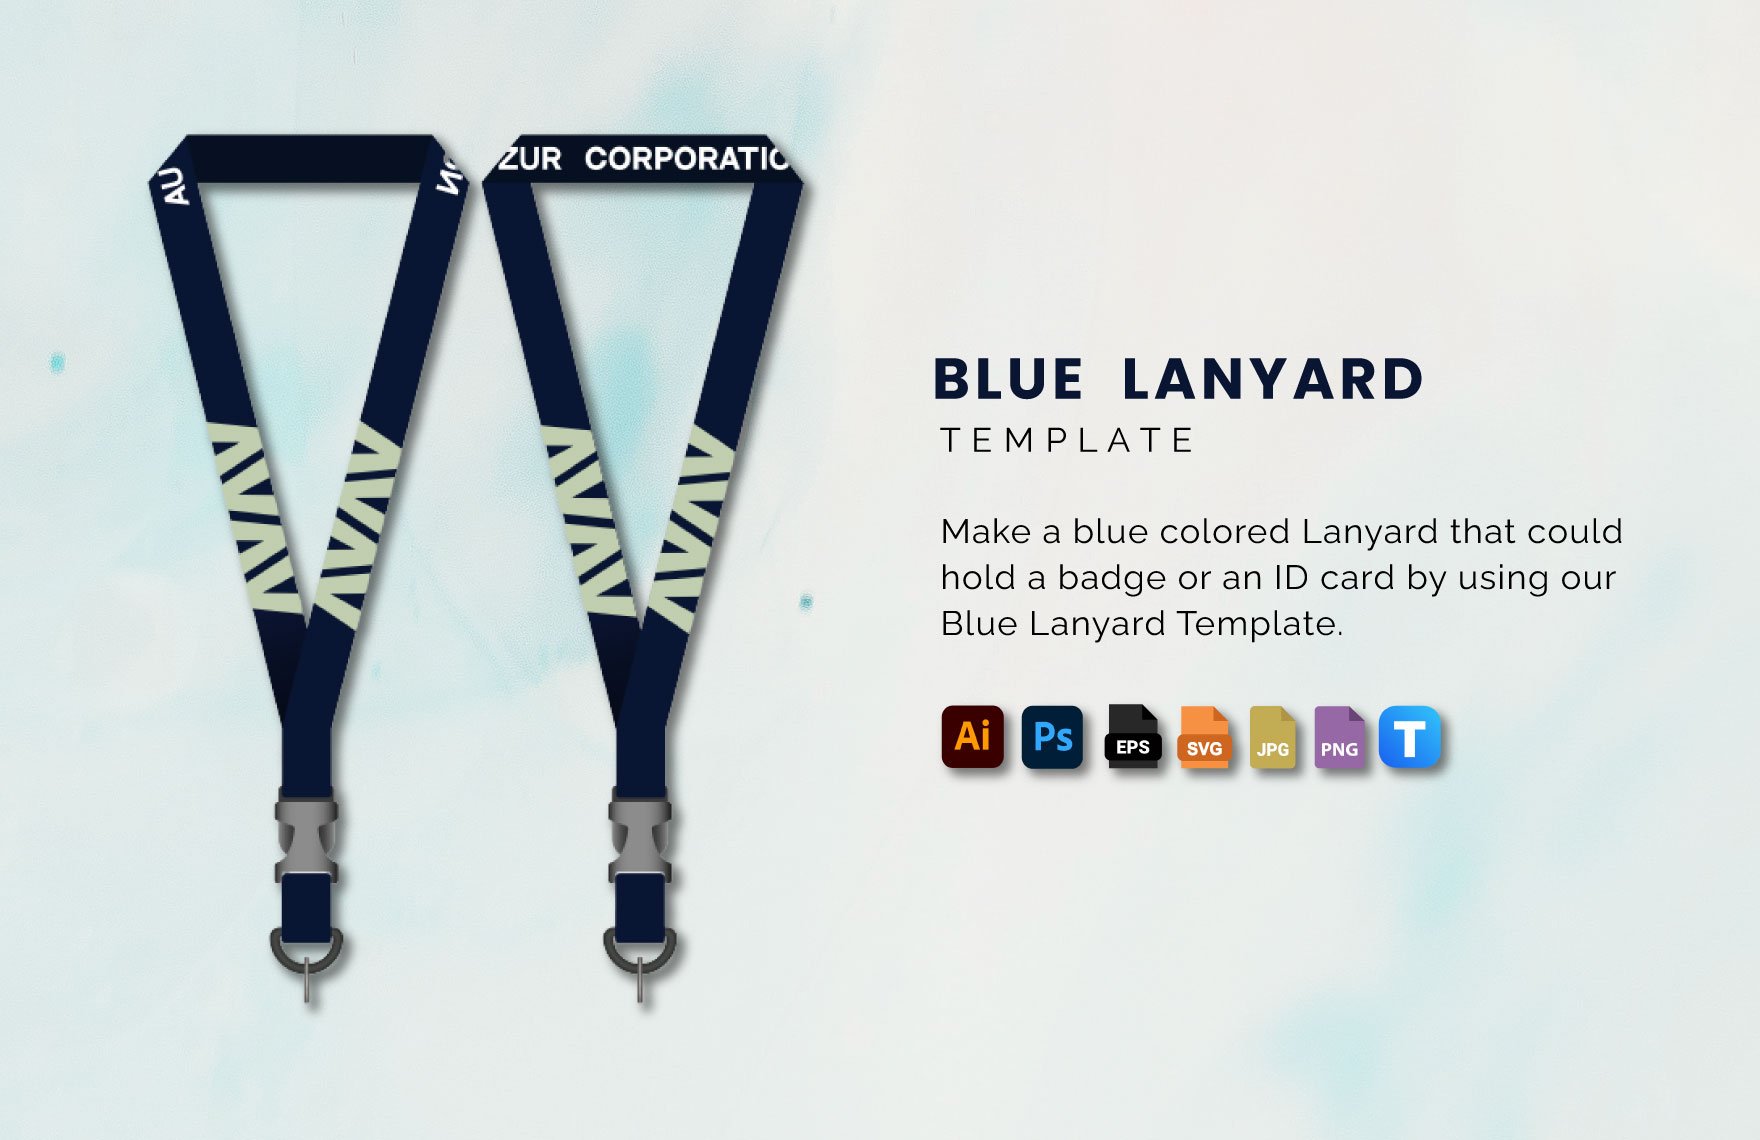 Blue Lanyard Template in Illustrator, PSD, EPS, SVG, JPG, PNG